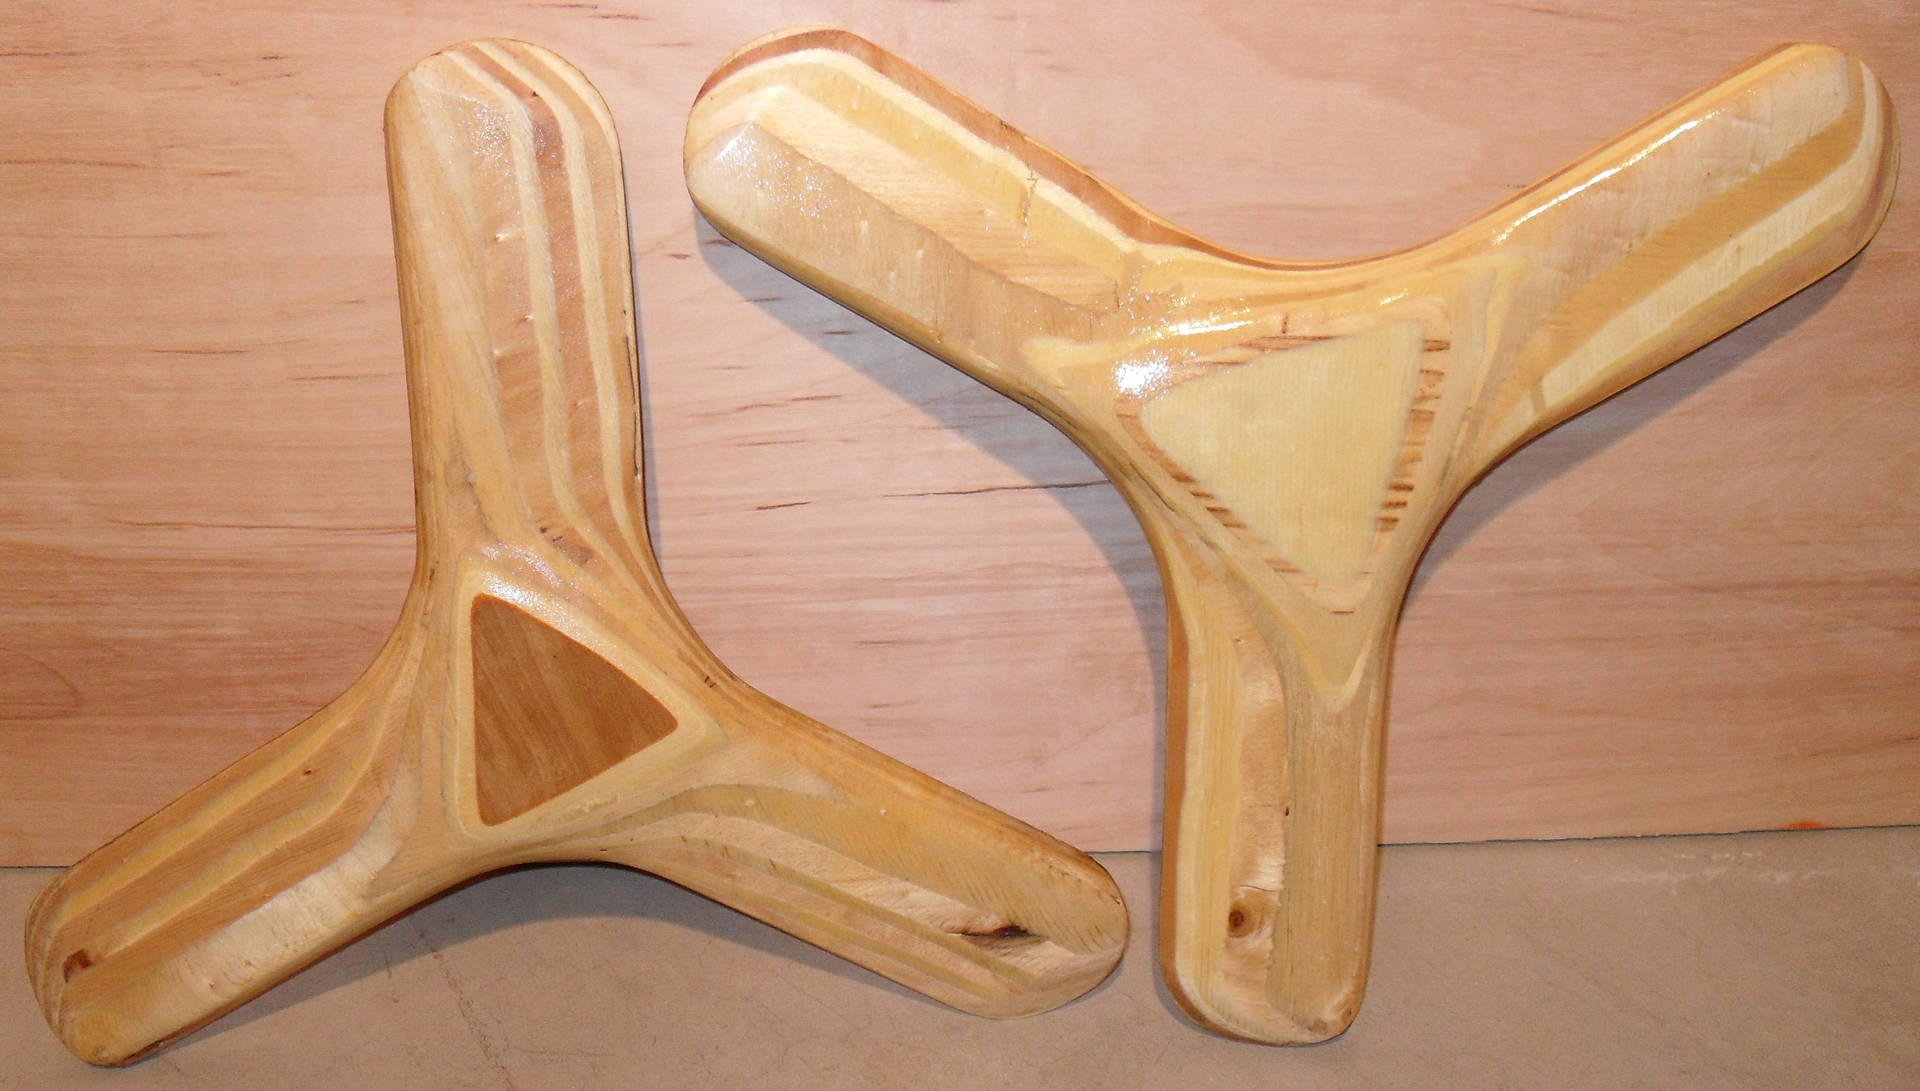 Two Wooden Boomerangs